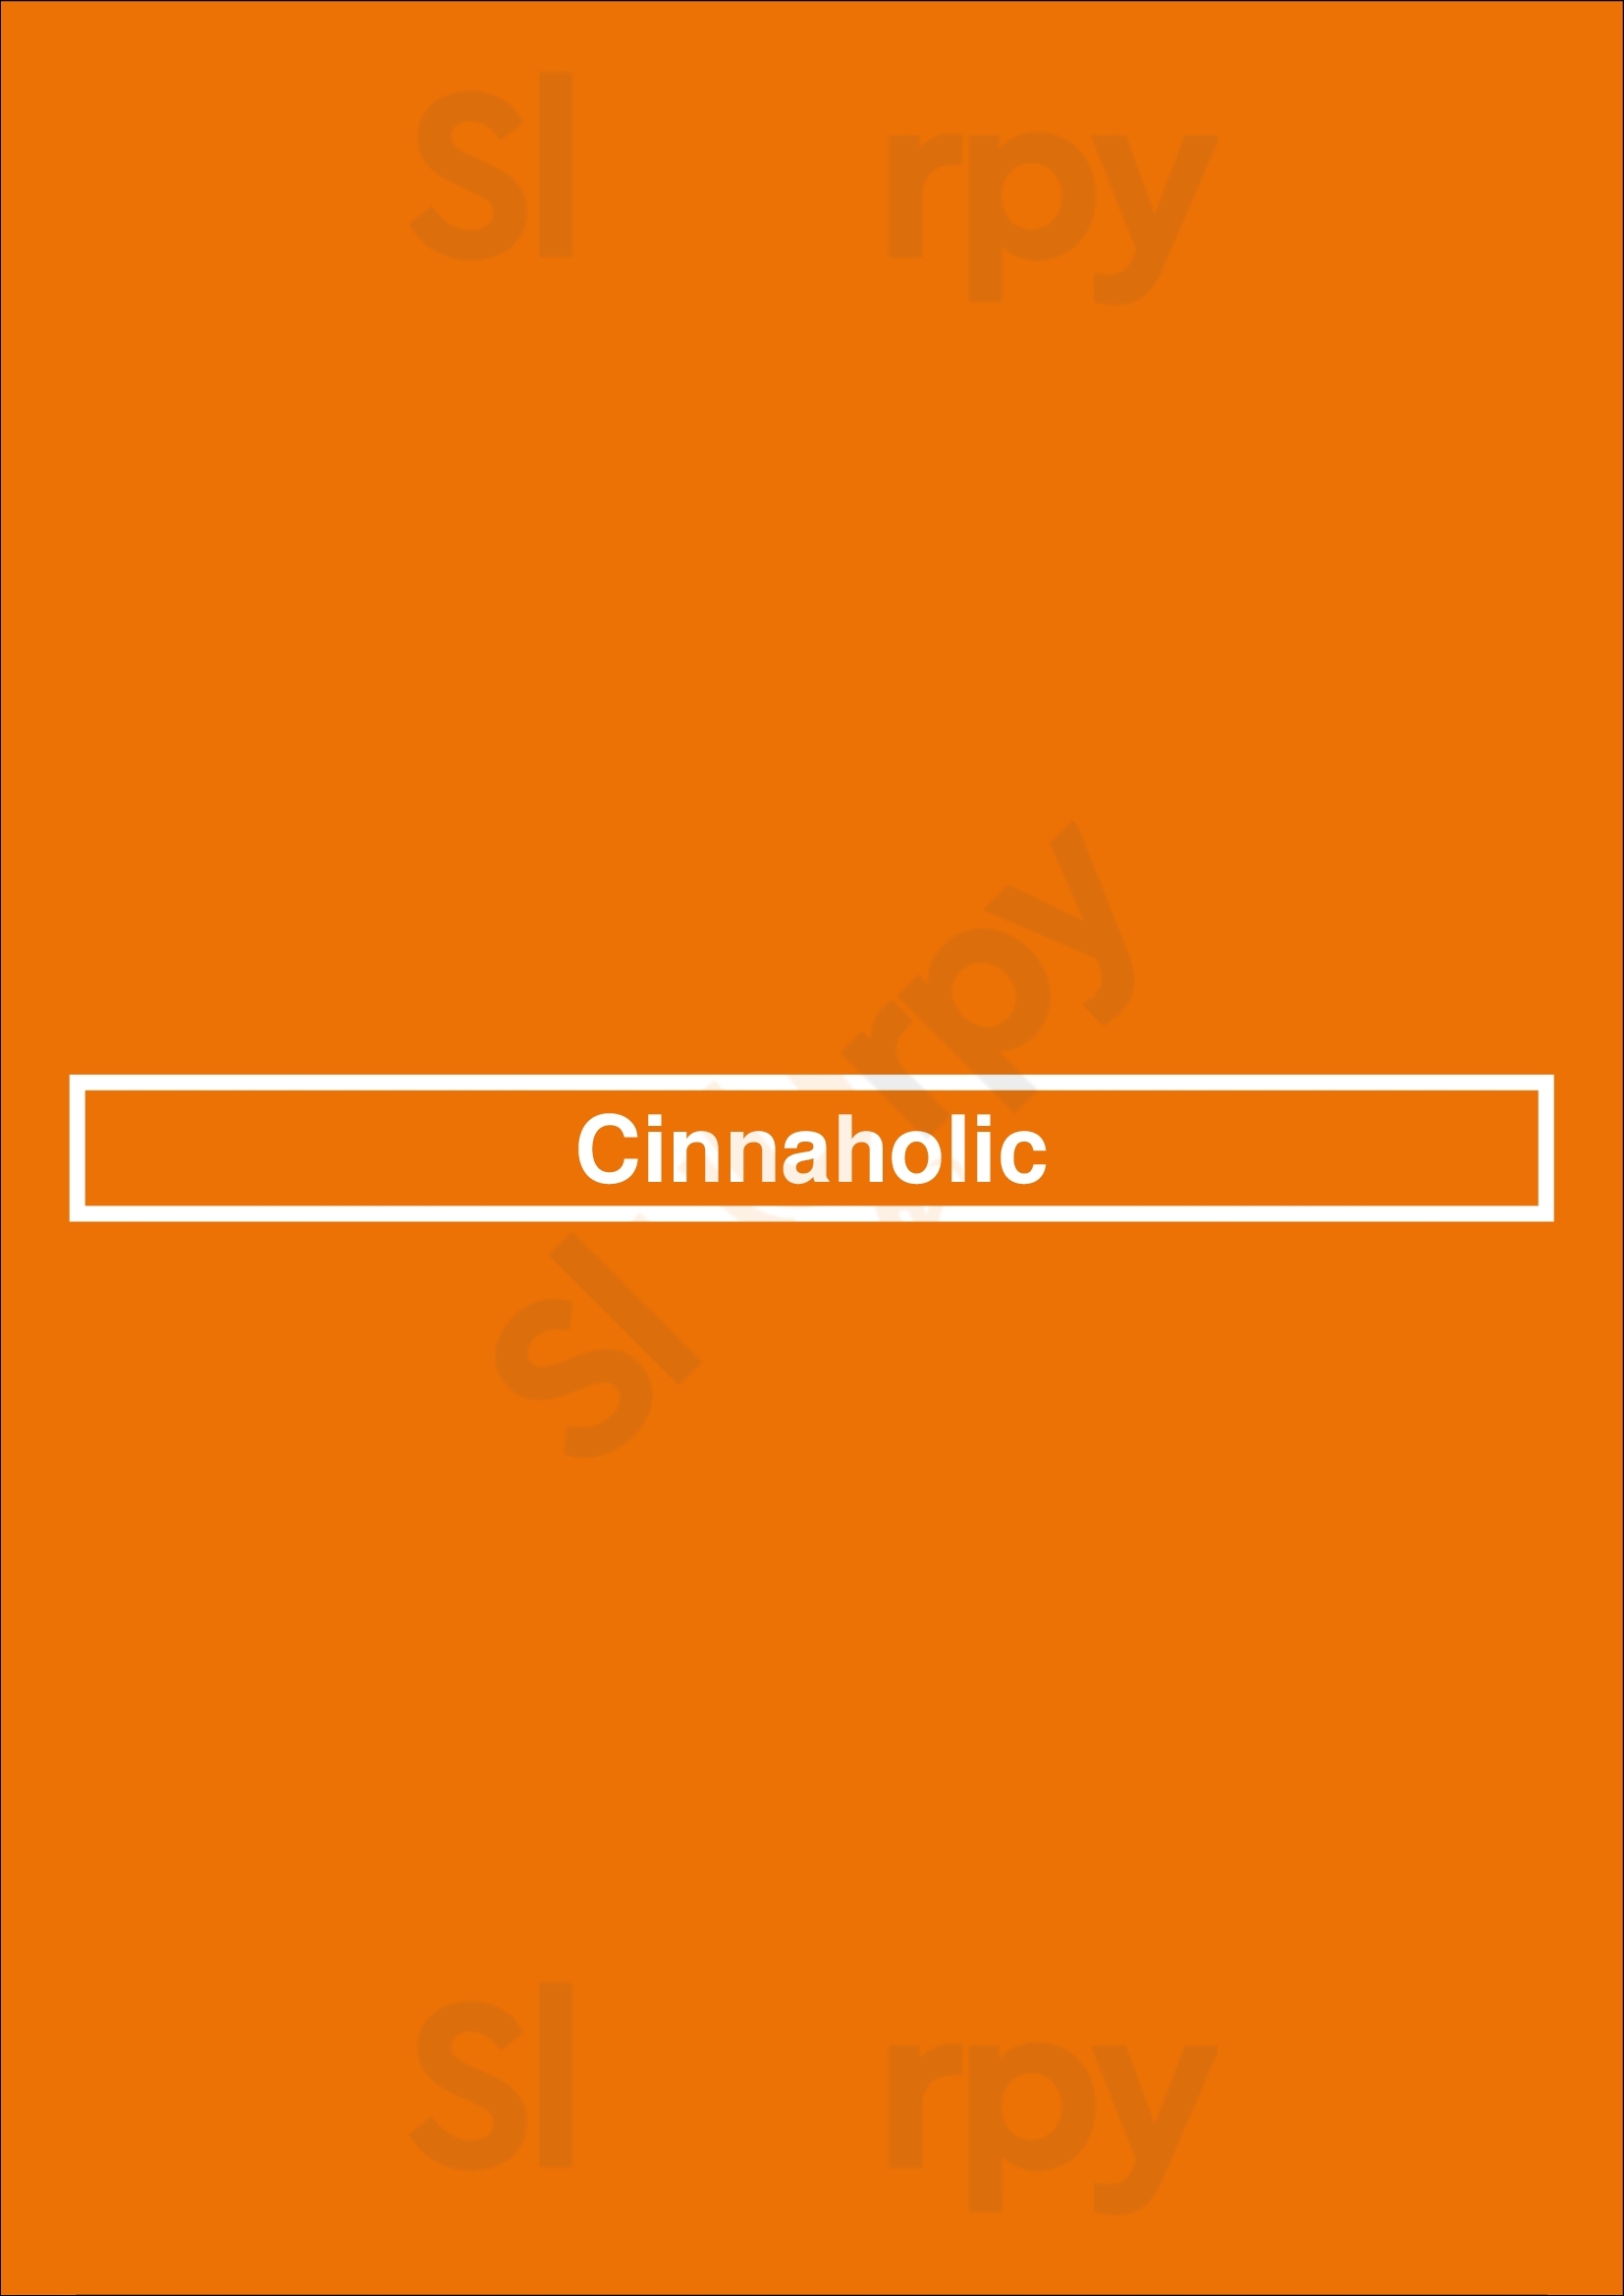 Cinnaholic Winnipeg Menu - 1